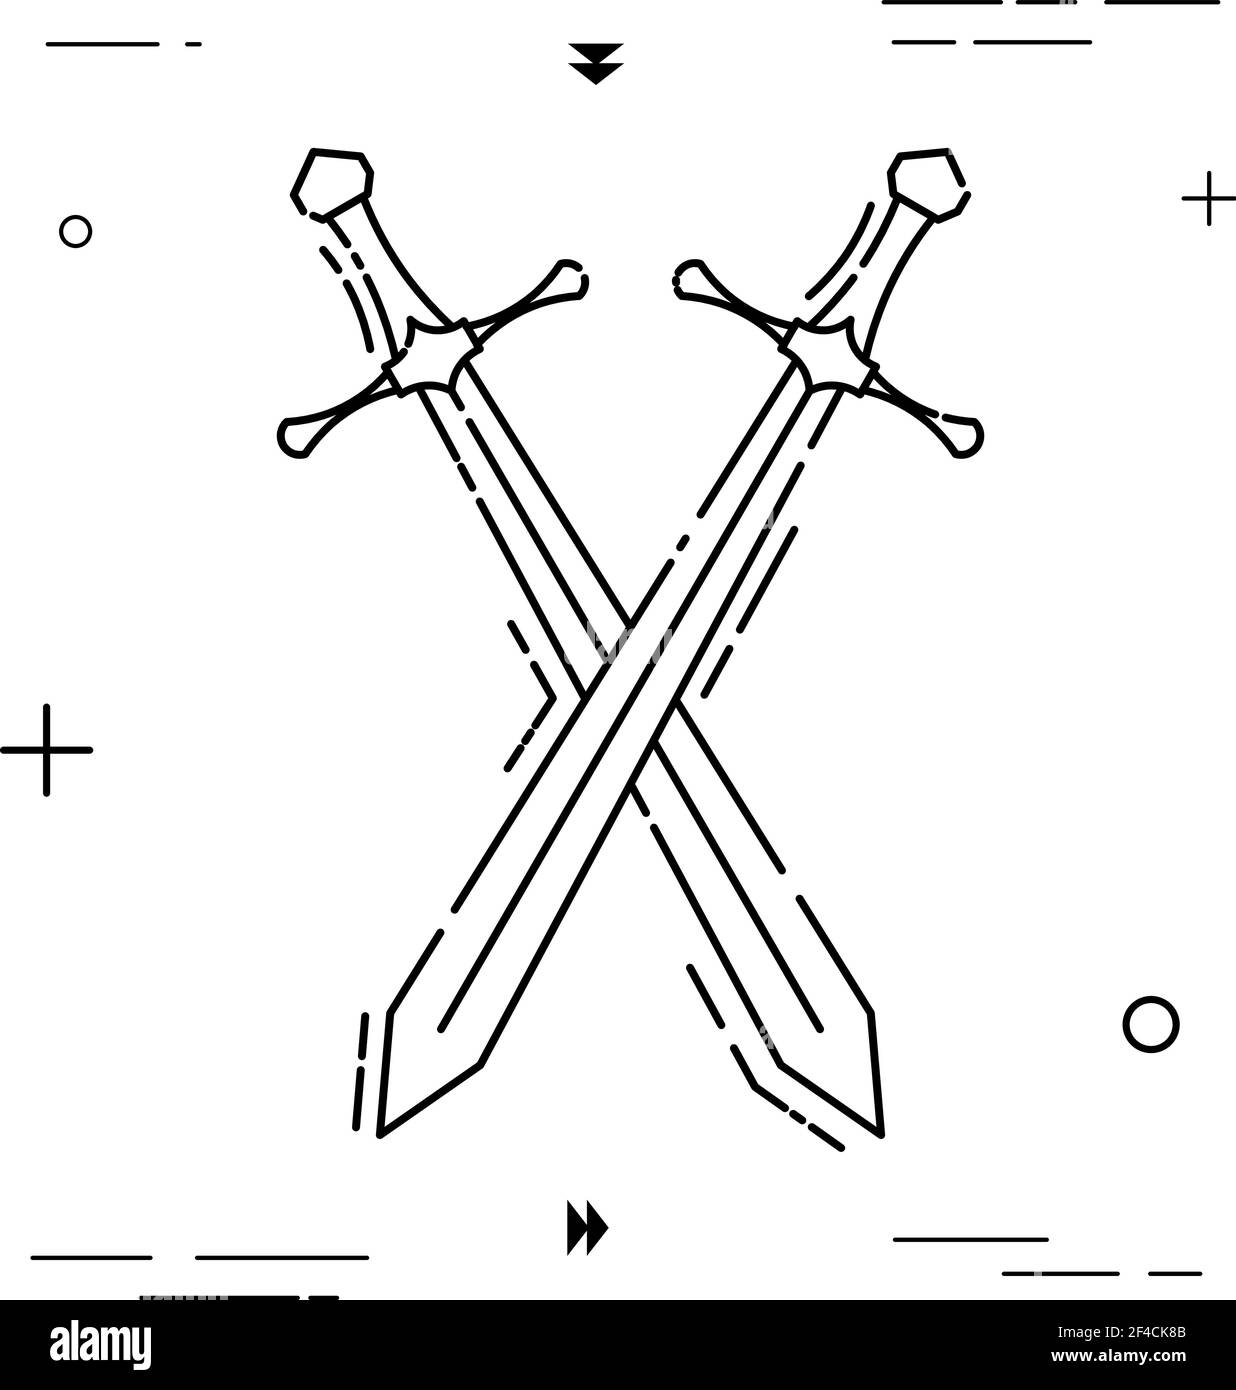 Crossed Swords Sketch Vector Illustration, Vectors